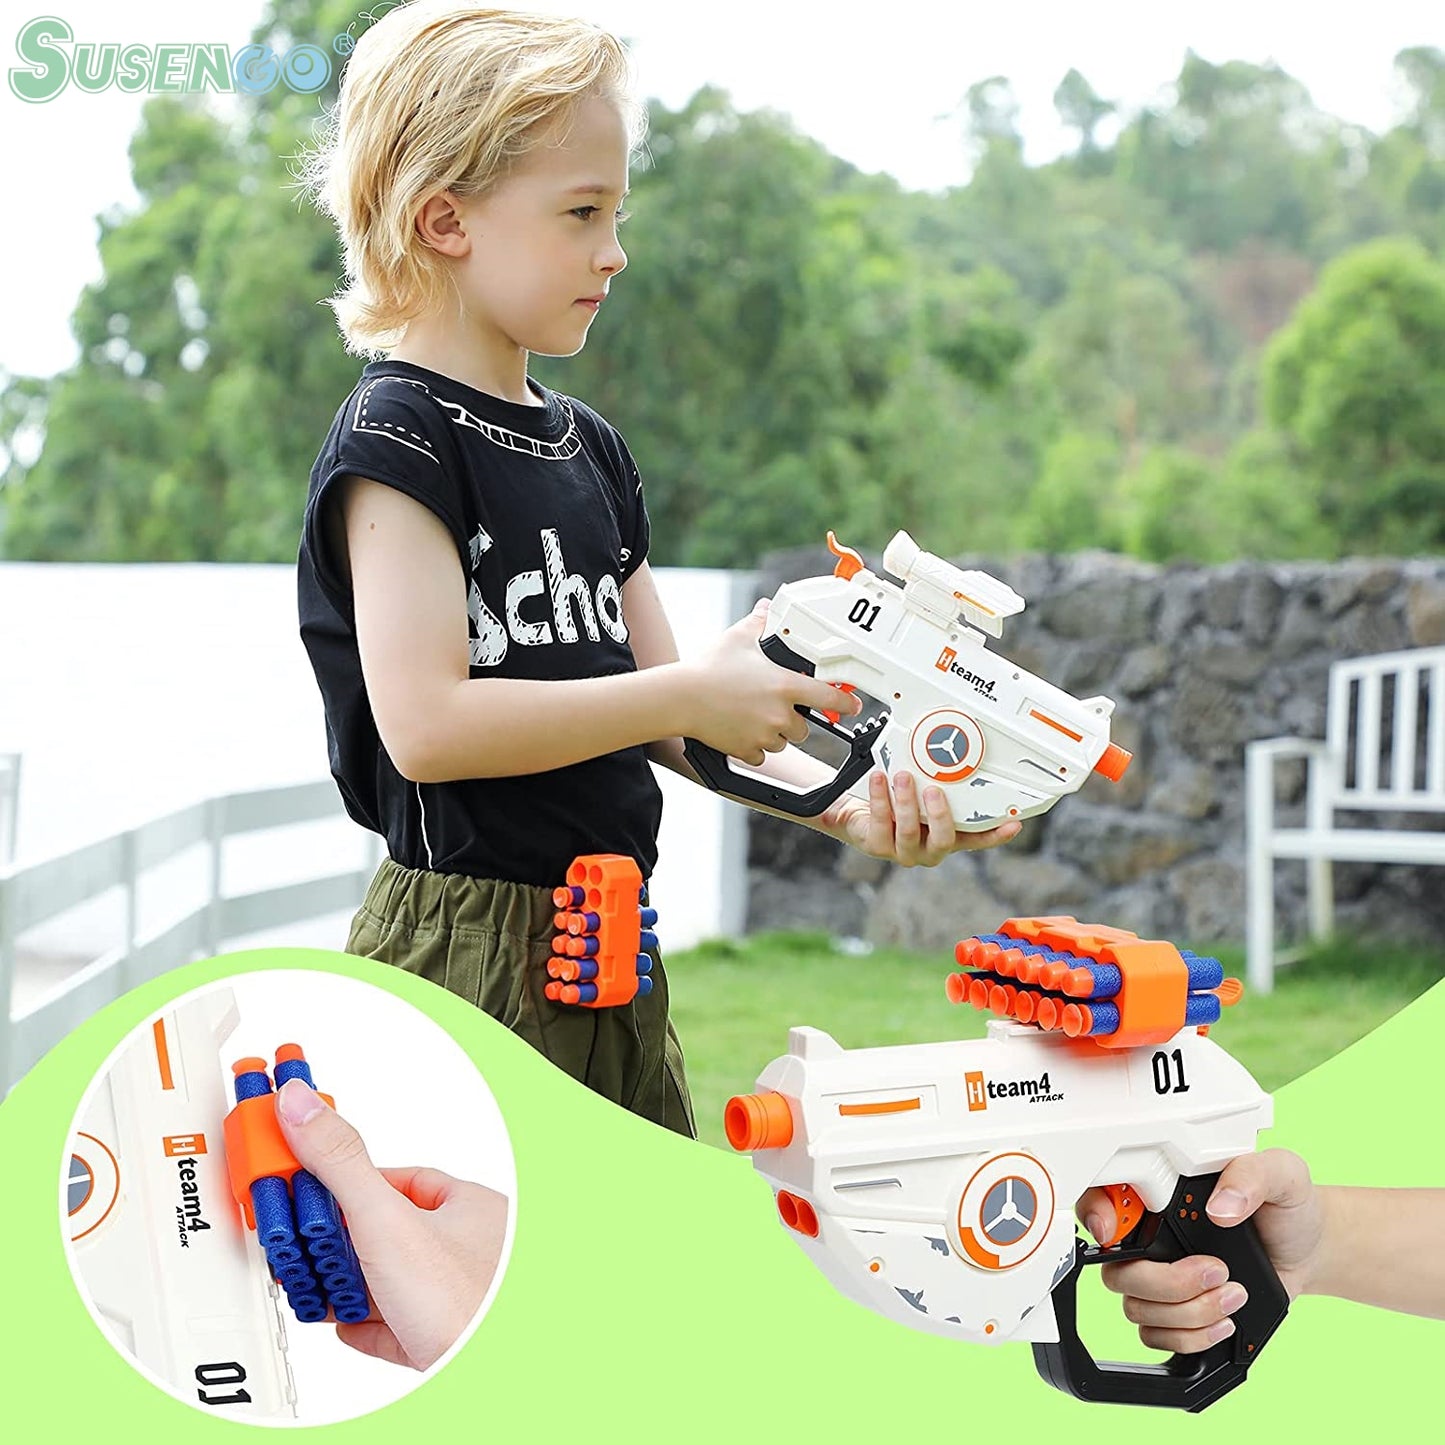 SUSENGO Toy pistols Mini Pistol